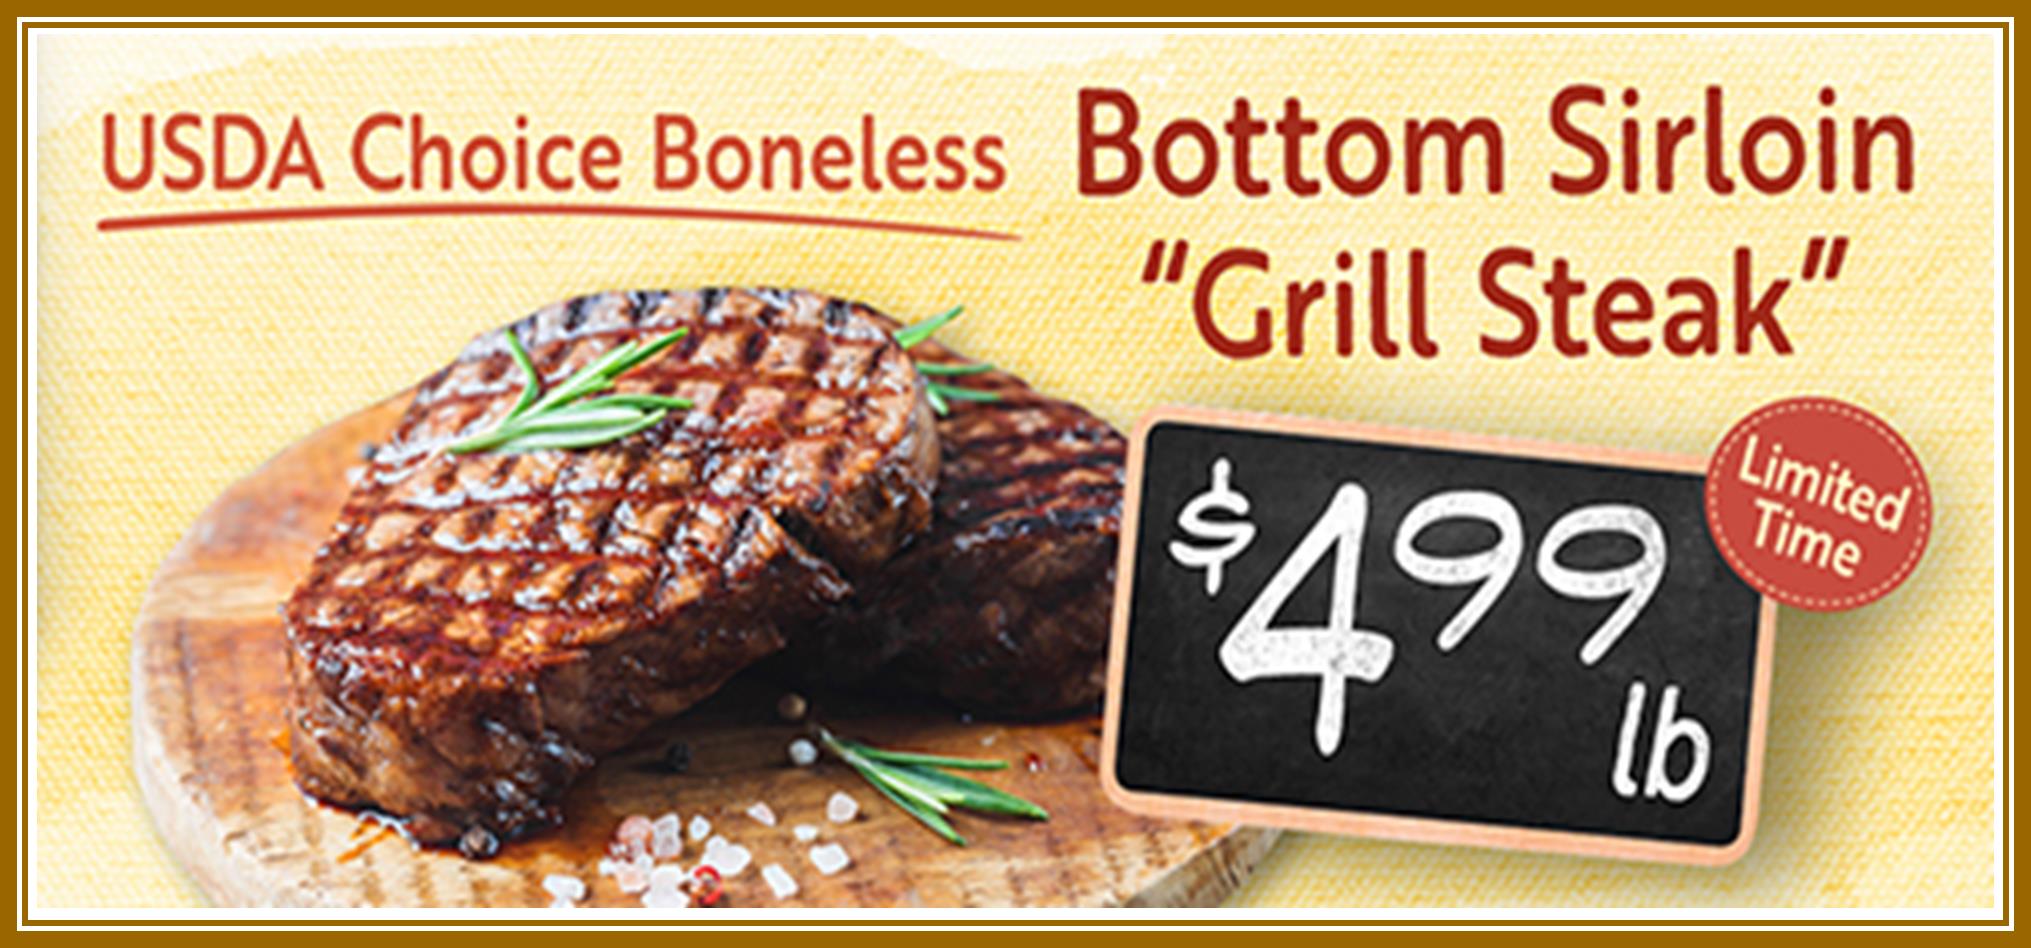 Bottom Sirloin Grill Steak 499.jpg